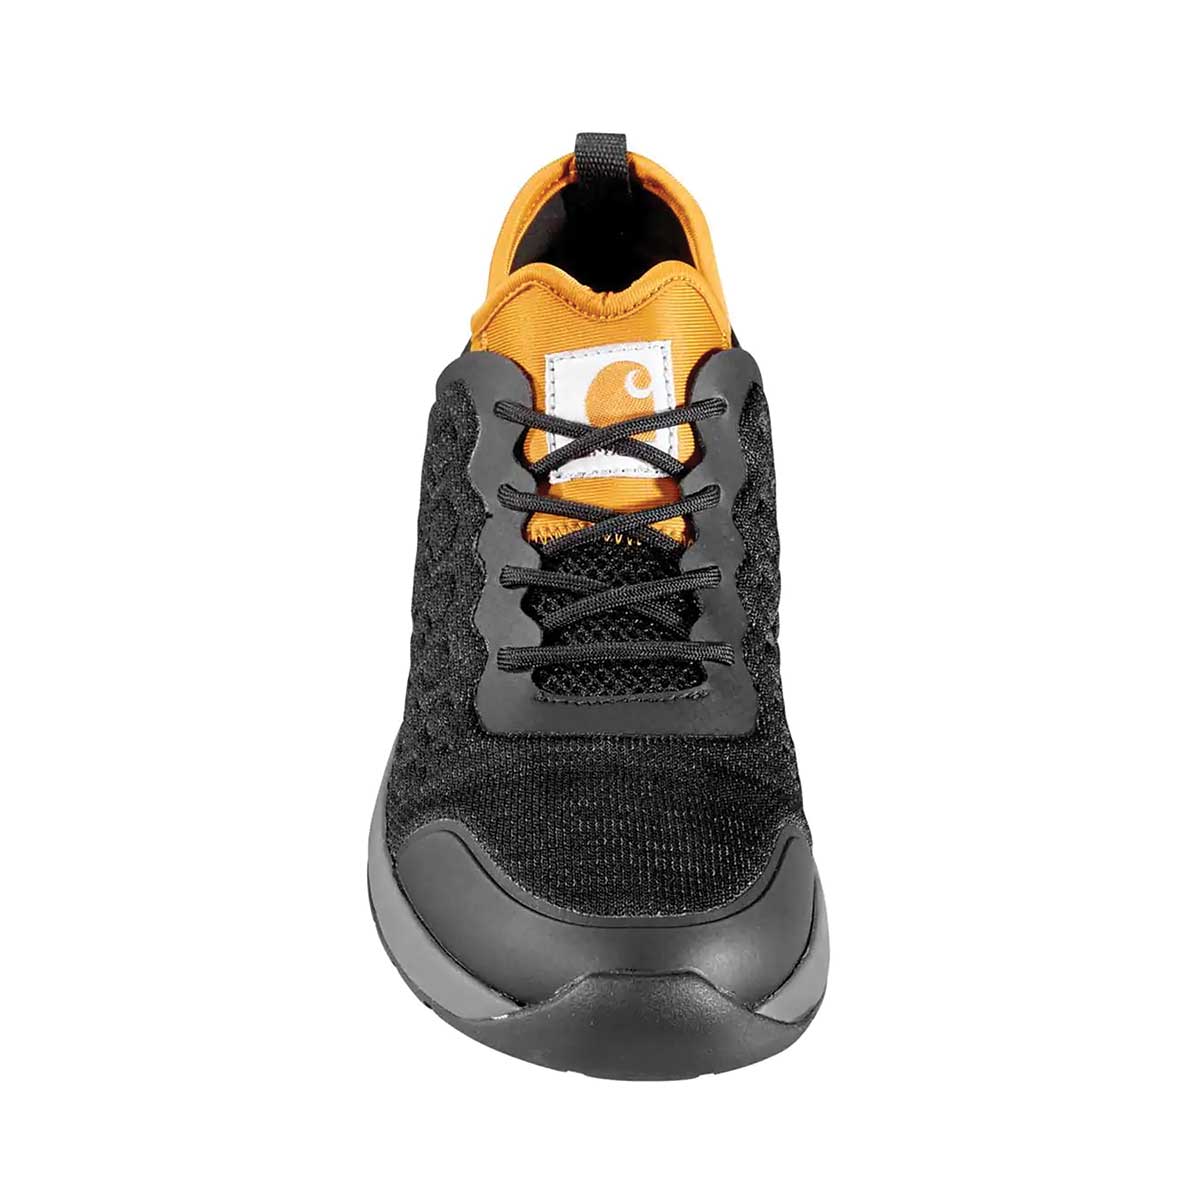 Carhartt Men's Force 3" Static Dissipative Work Sneakers